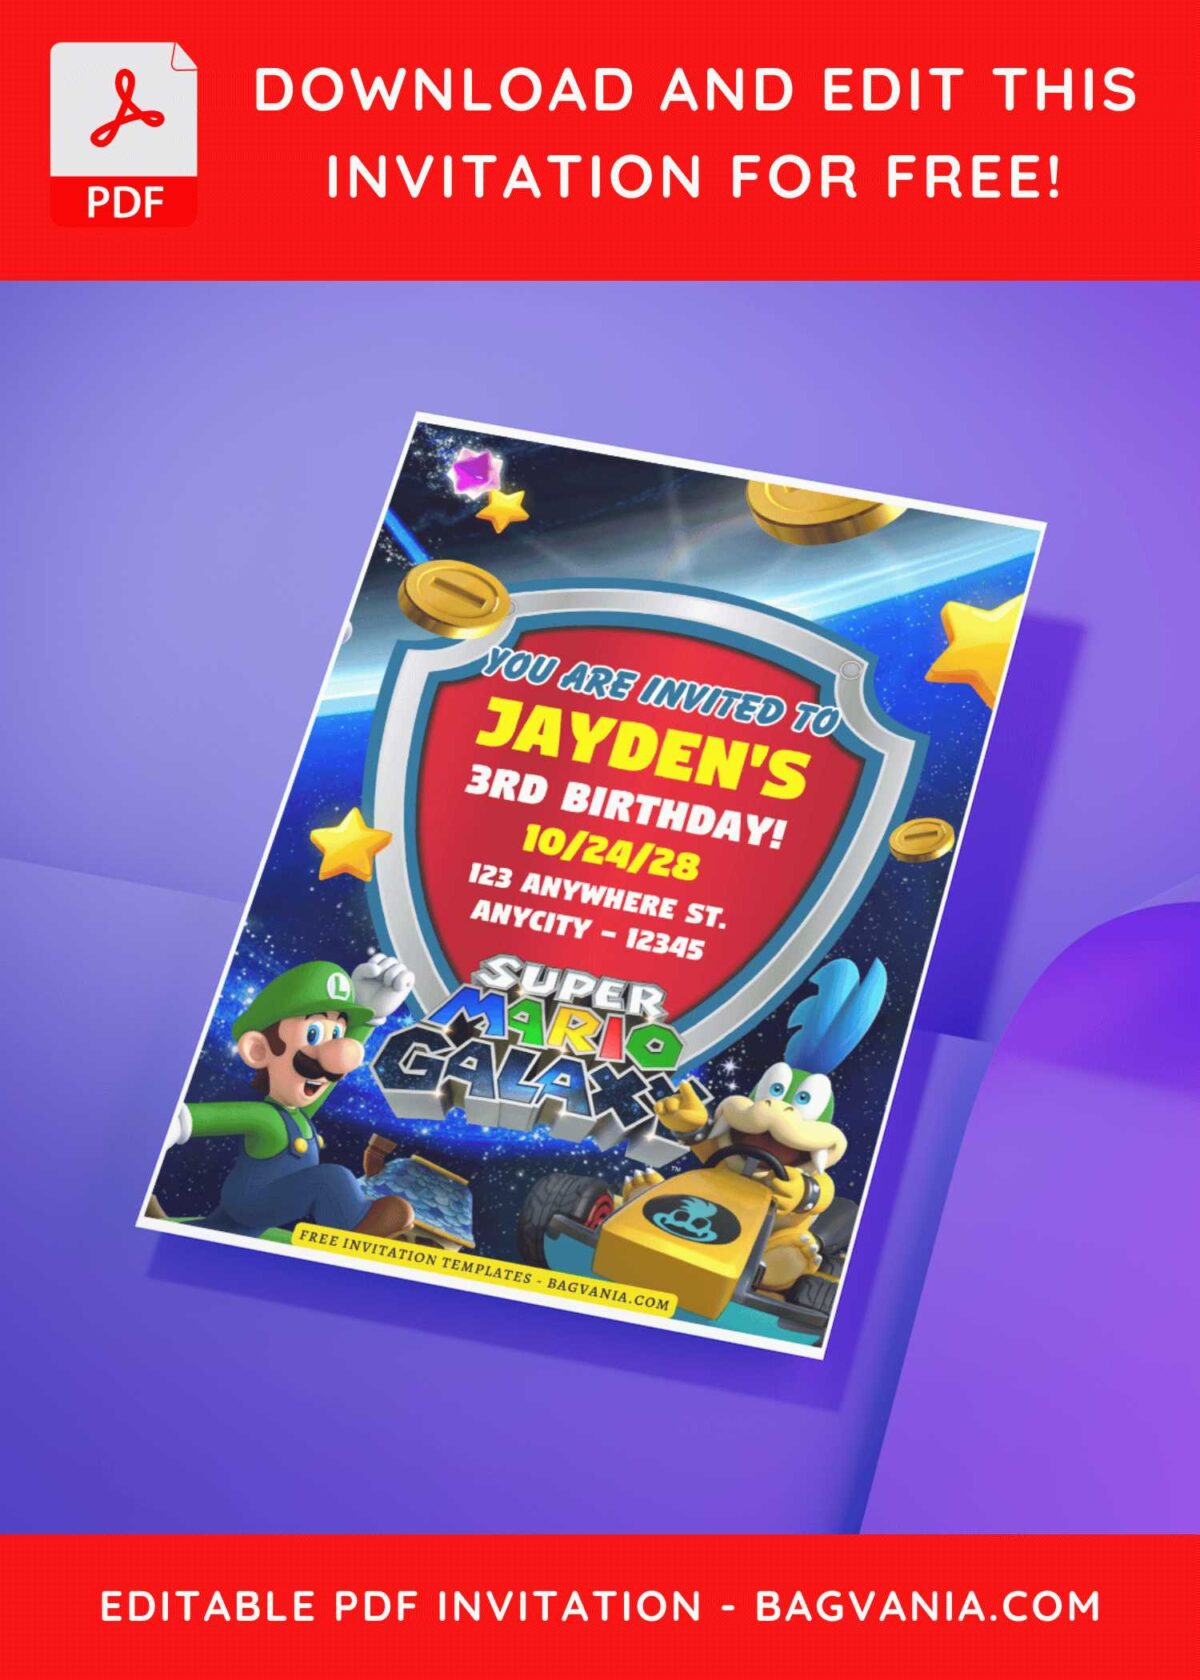 (Free Editable PDF) Super Awesome Mario World Birthday Invitation Templates H